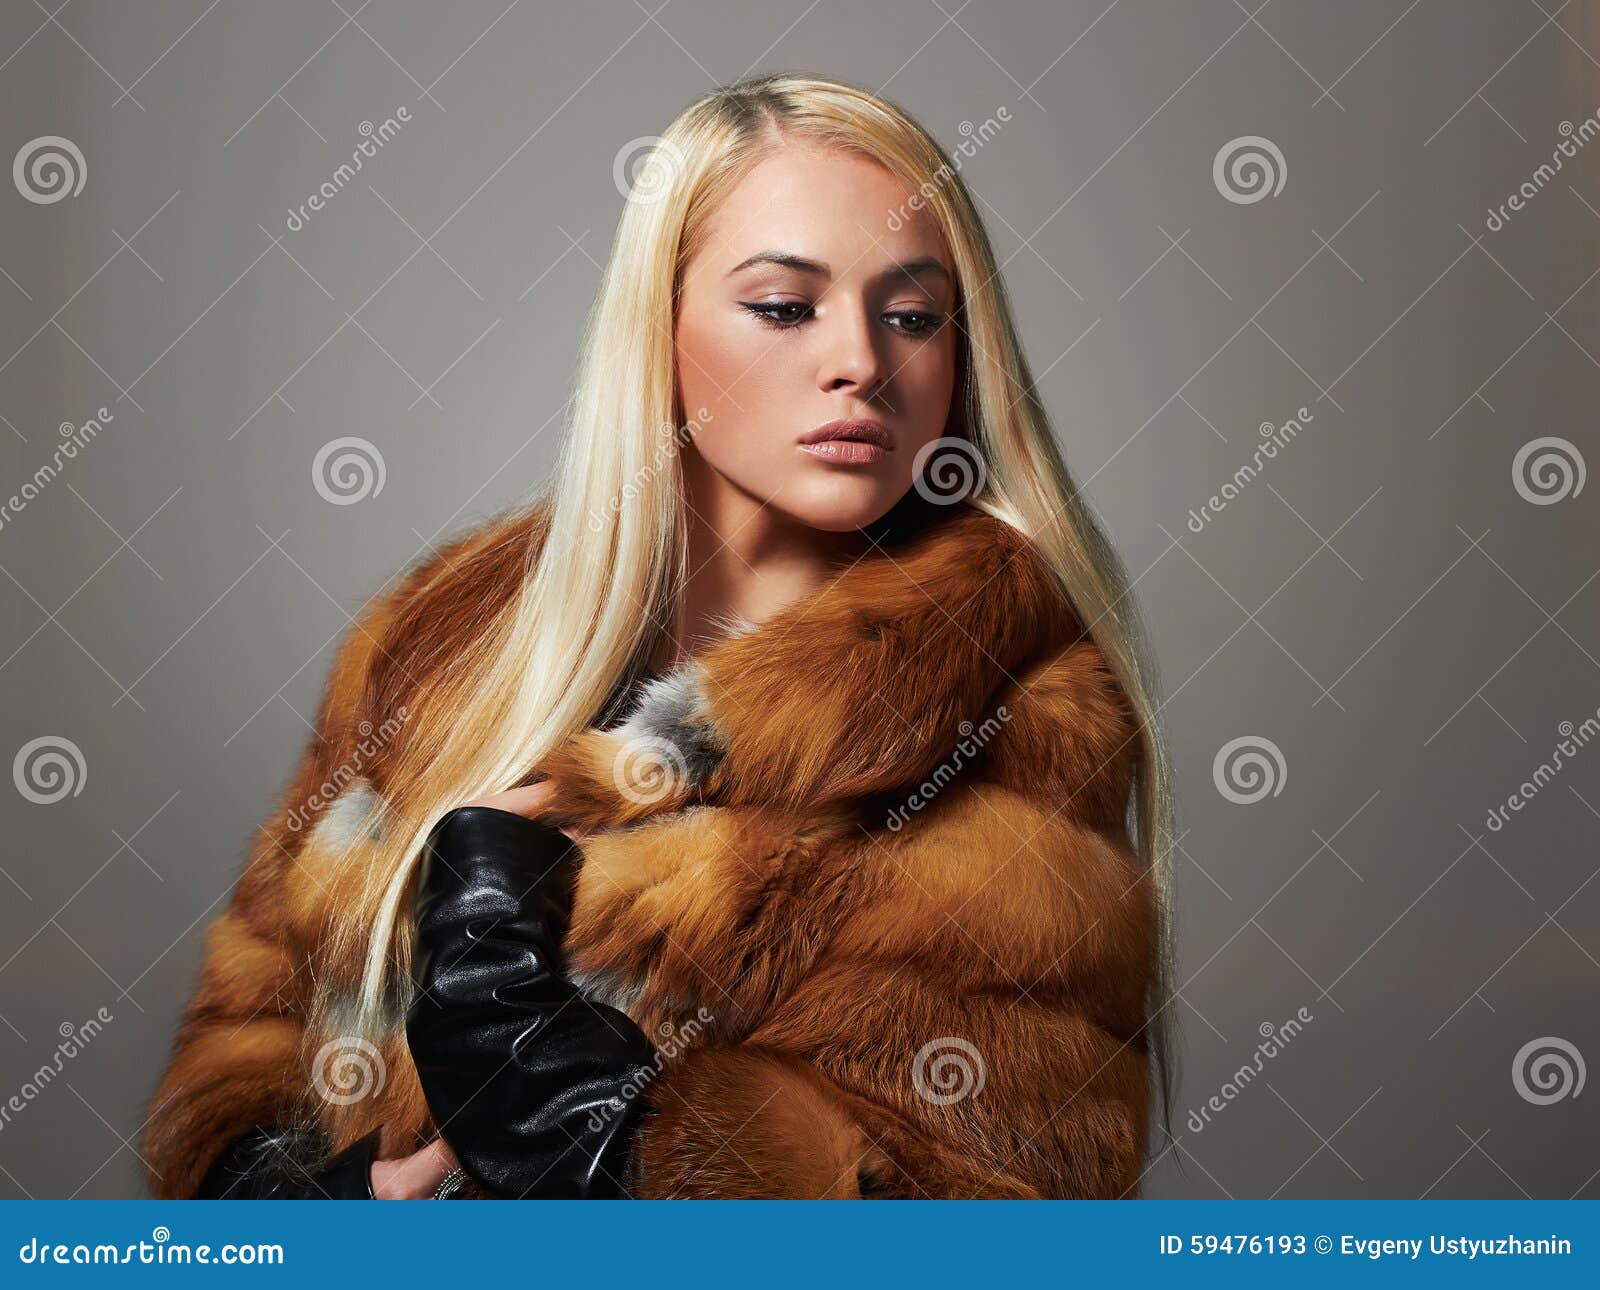 manteau luxe femme